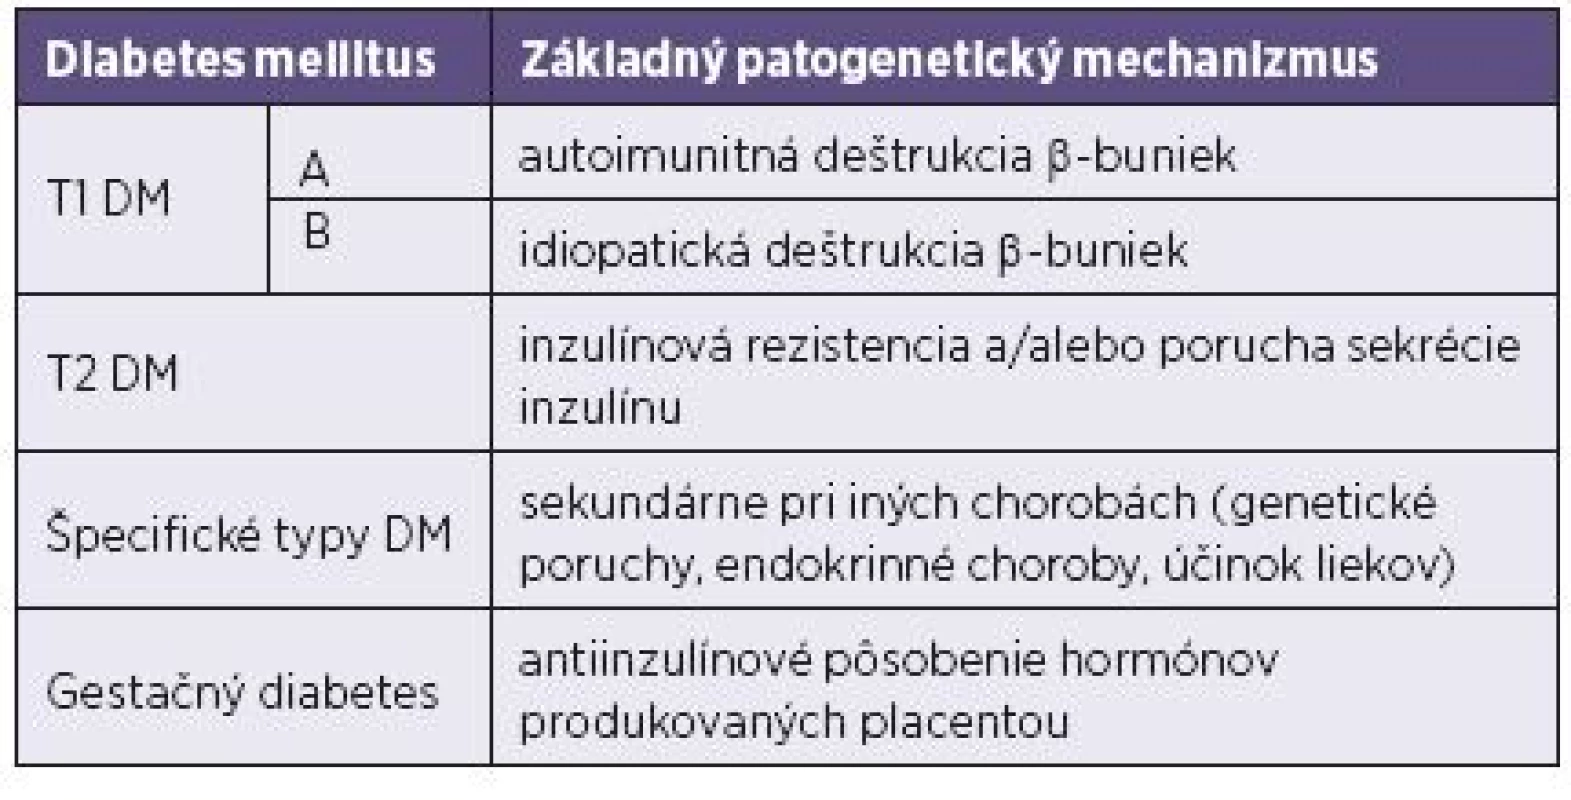 Klasifikácia diabetes mellitus podľa ADA 2010 [2, 4]
Table 1. ADA classification of diabetes mellitus, 2010 [2, 4]